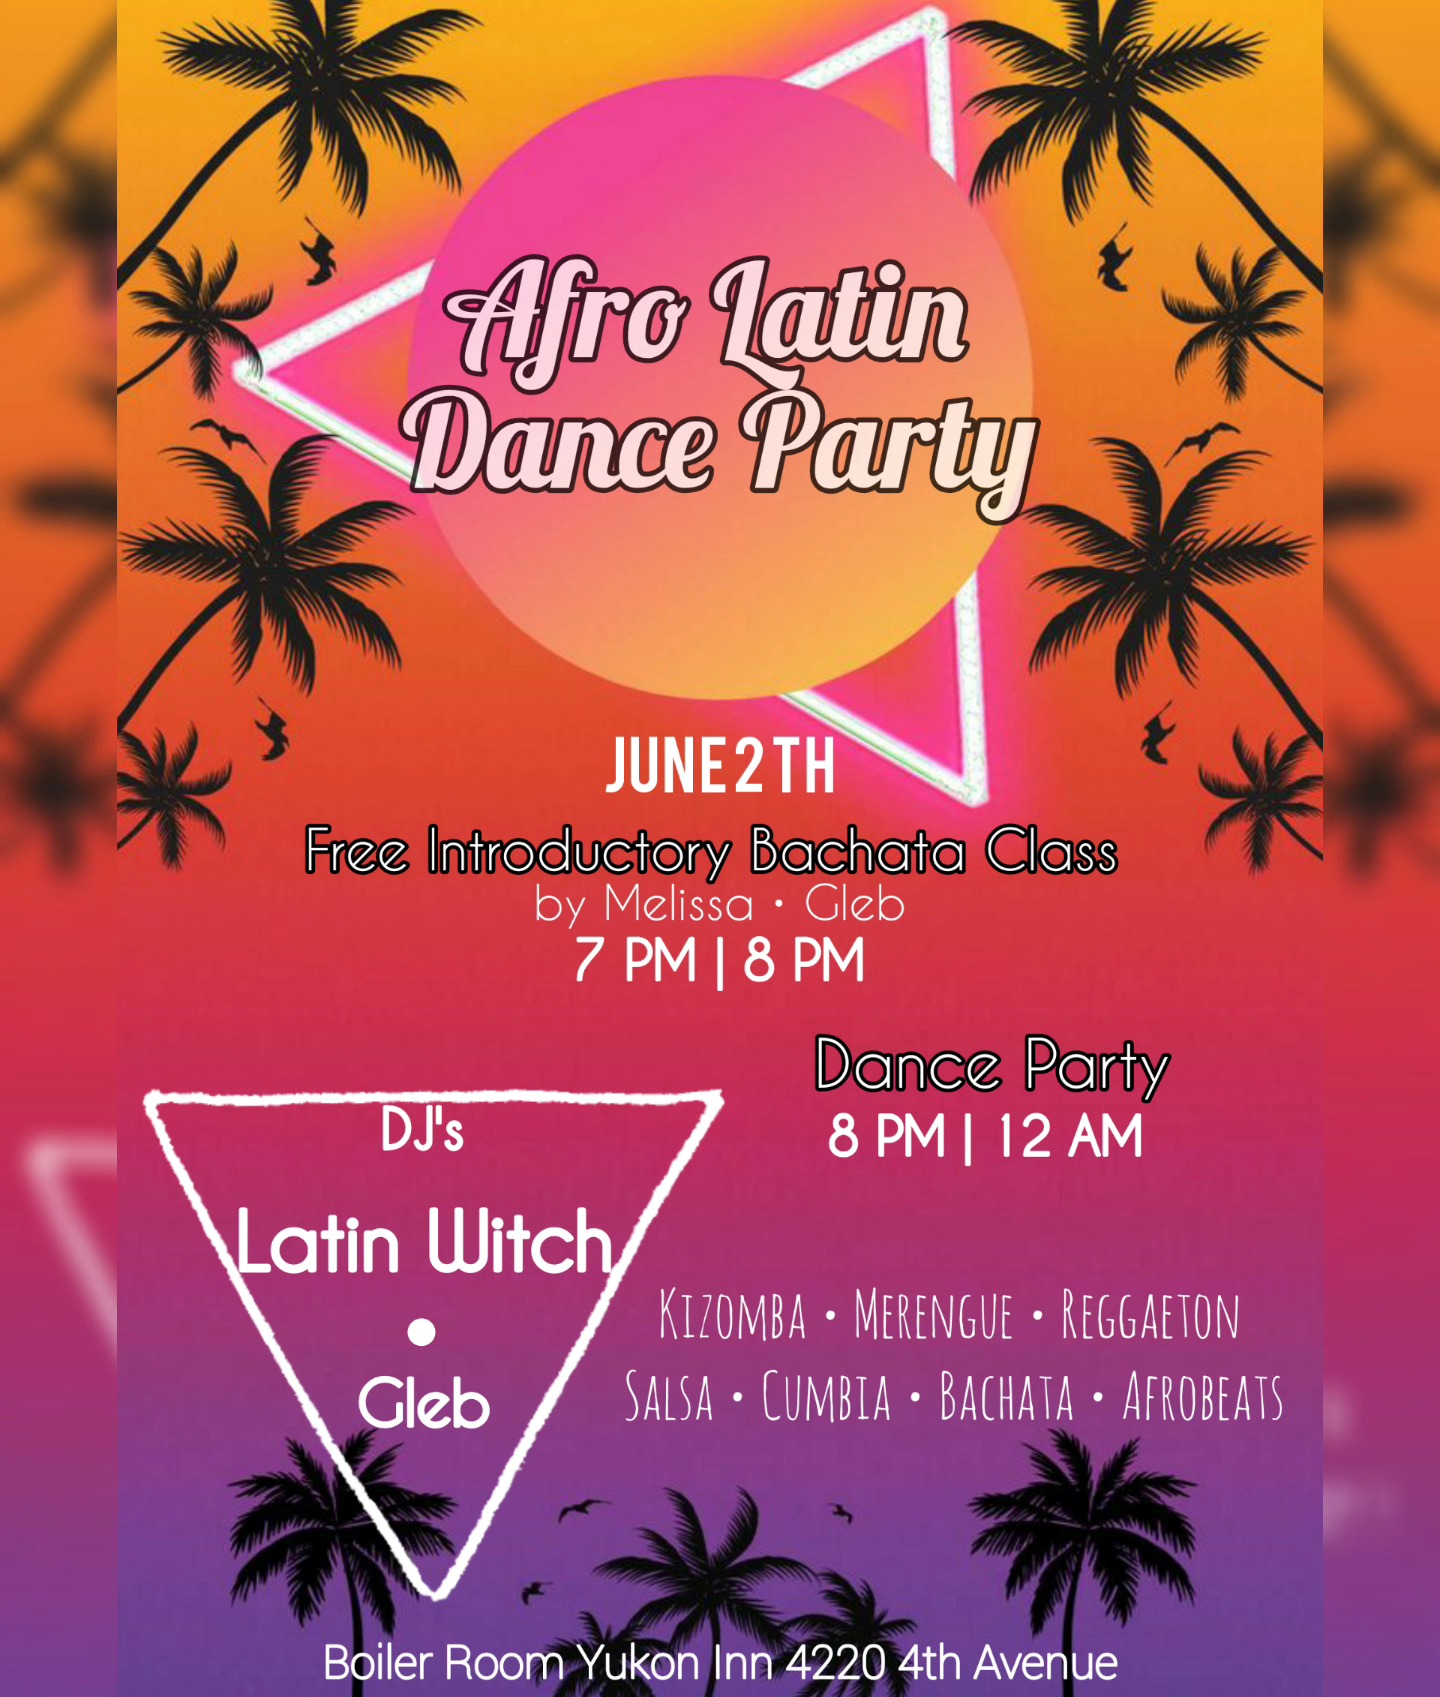 Afro Latin Dance Night